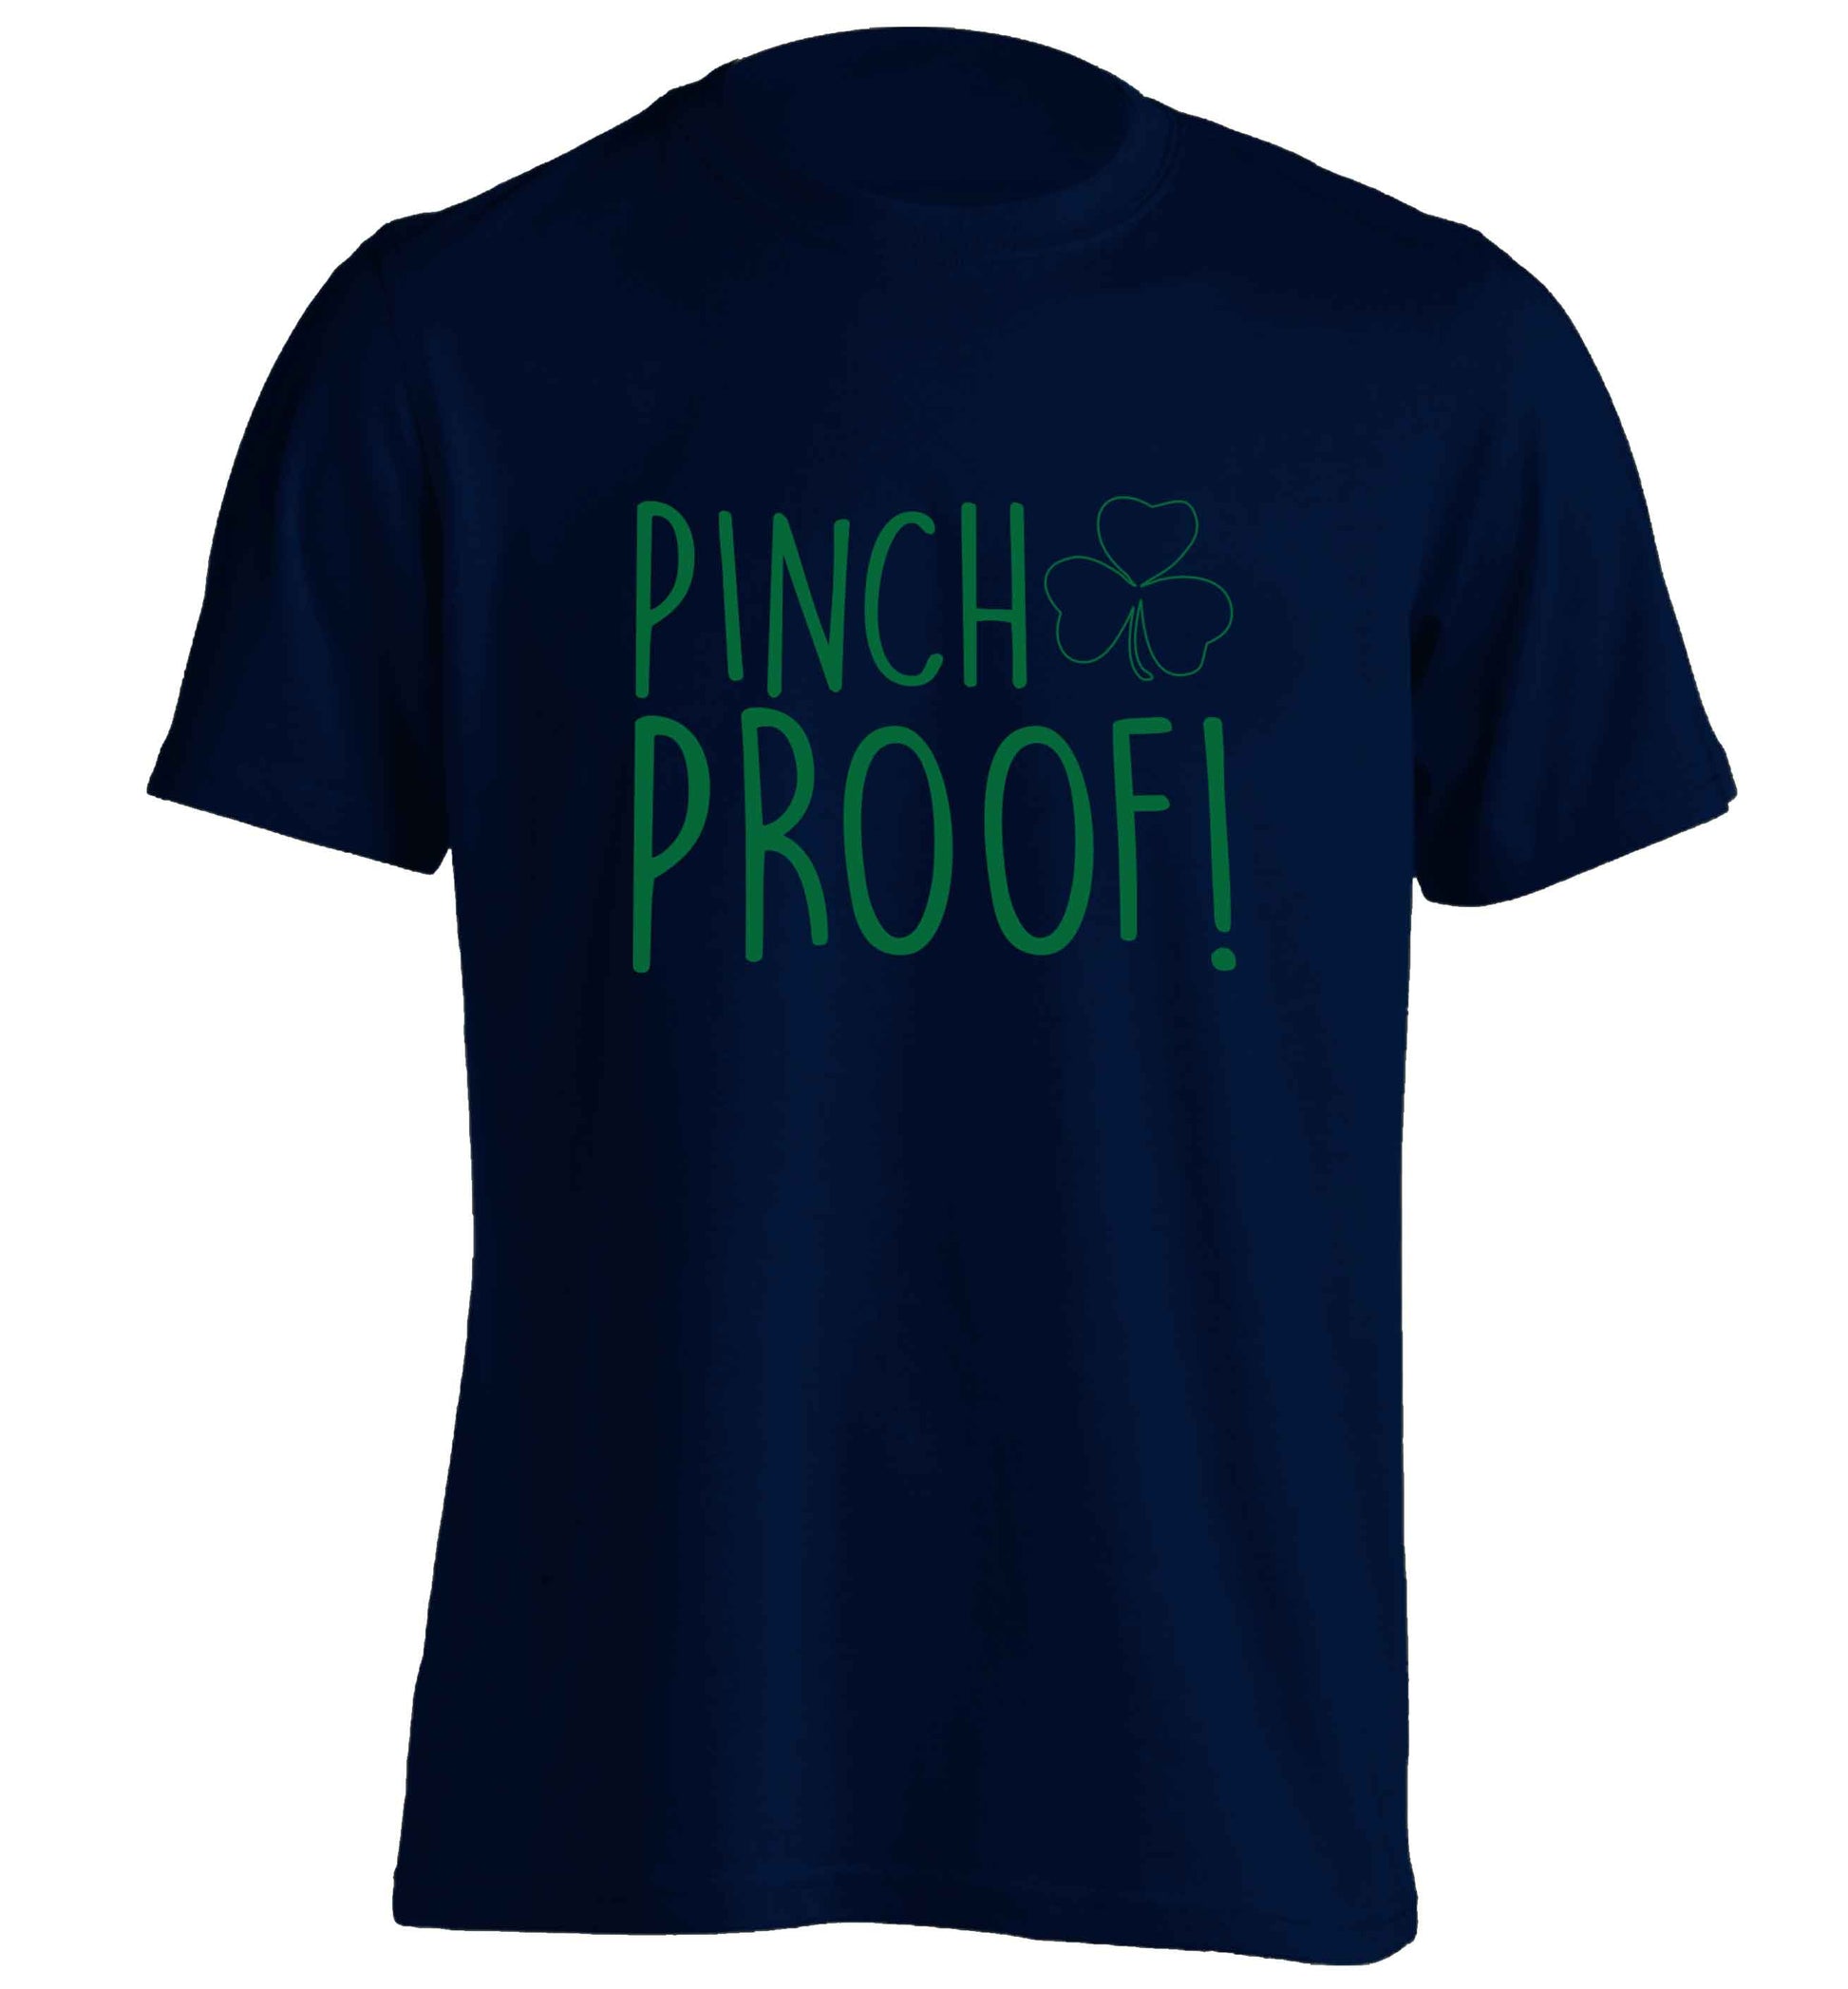 Pinch Proof adults unisex navy Tshirt 2XL